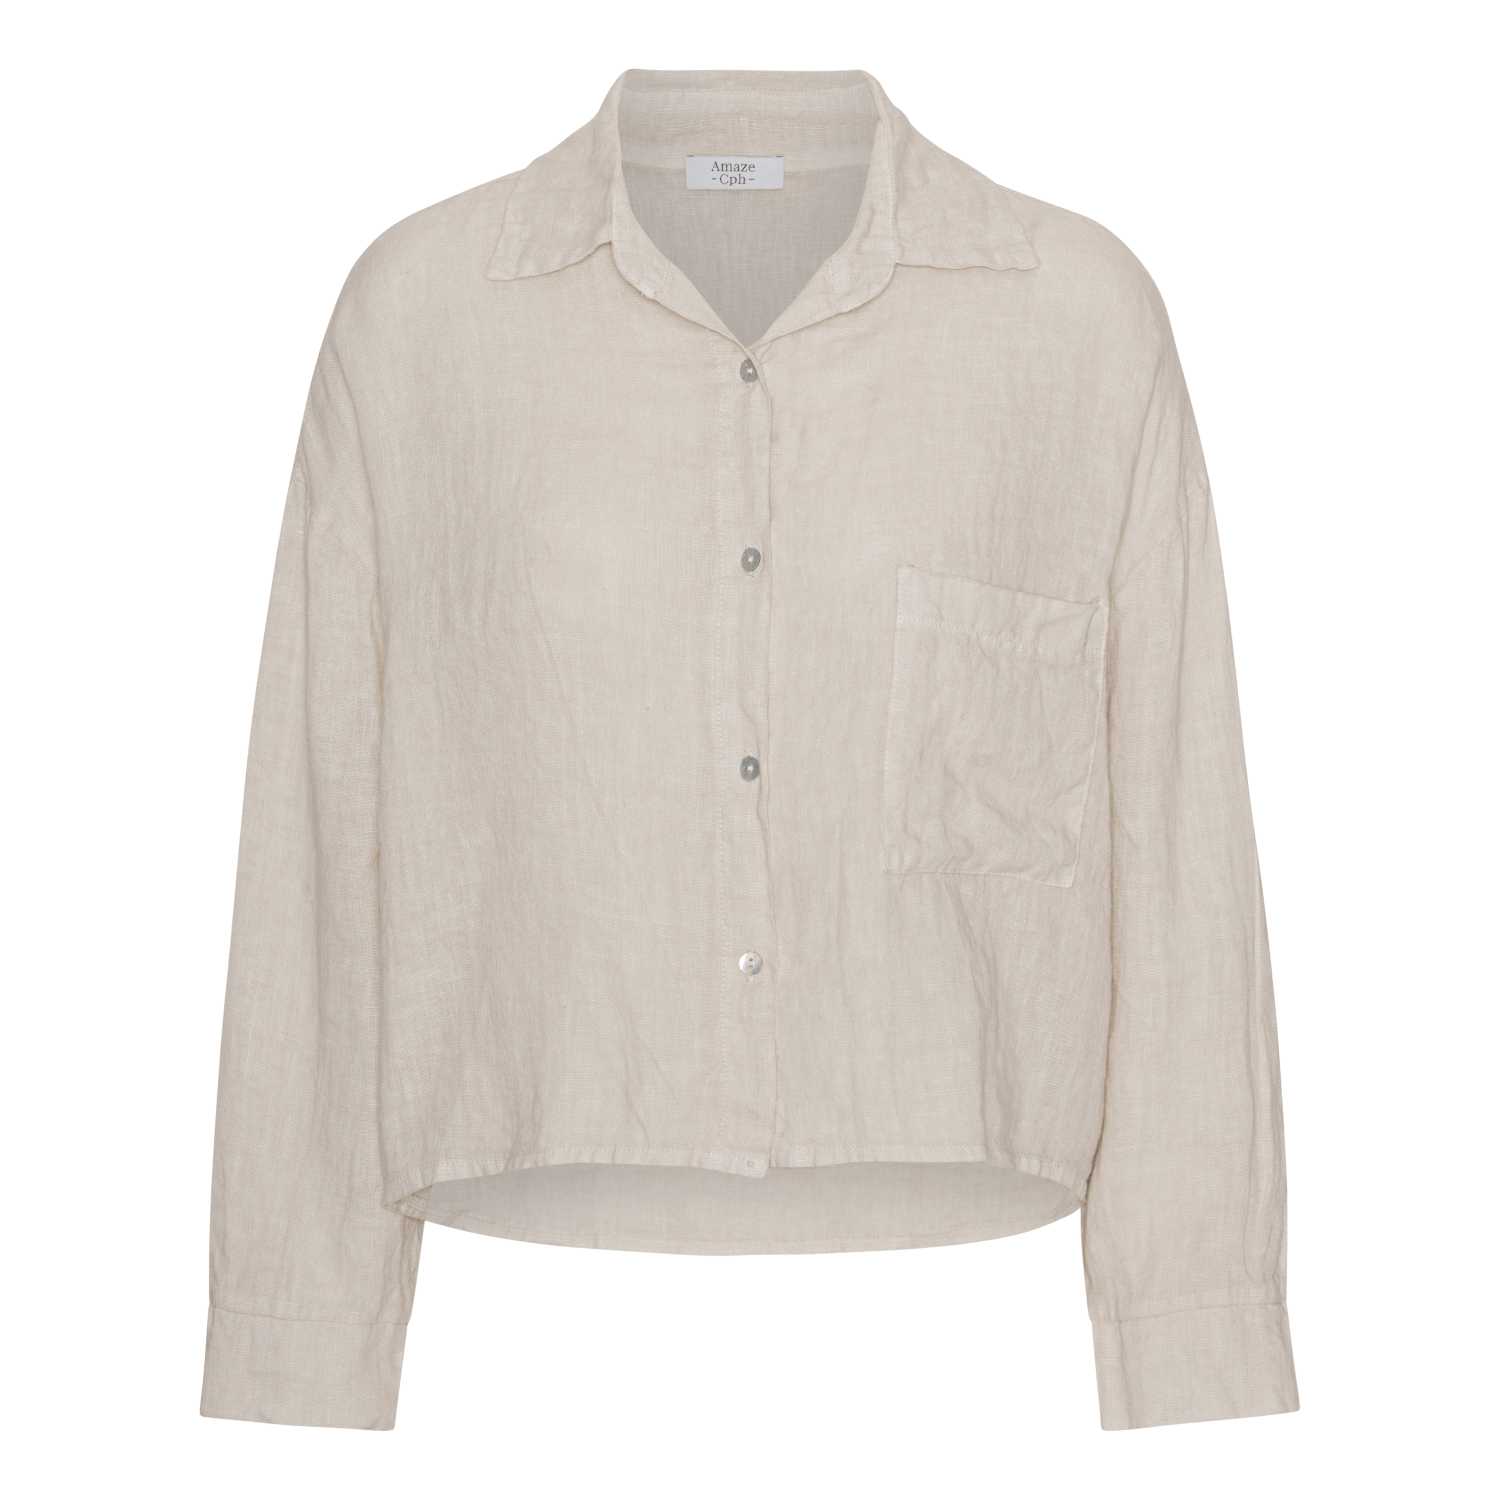 Linen Shirt - Sand - Amaze Cph - Sand - One Size